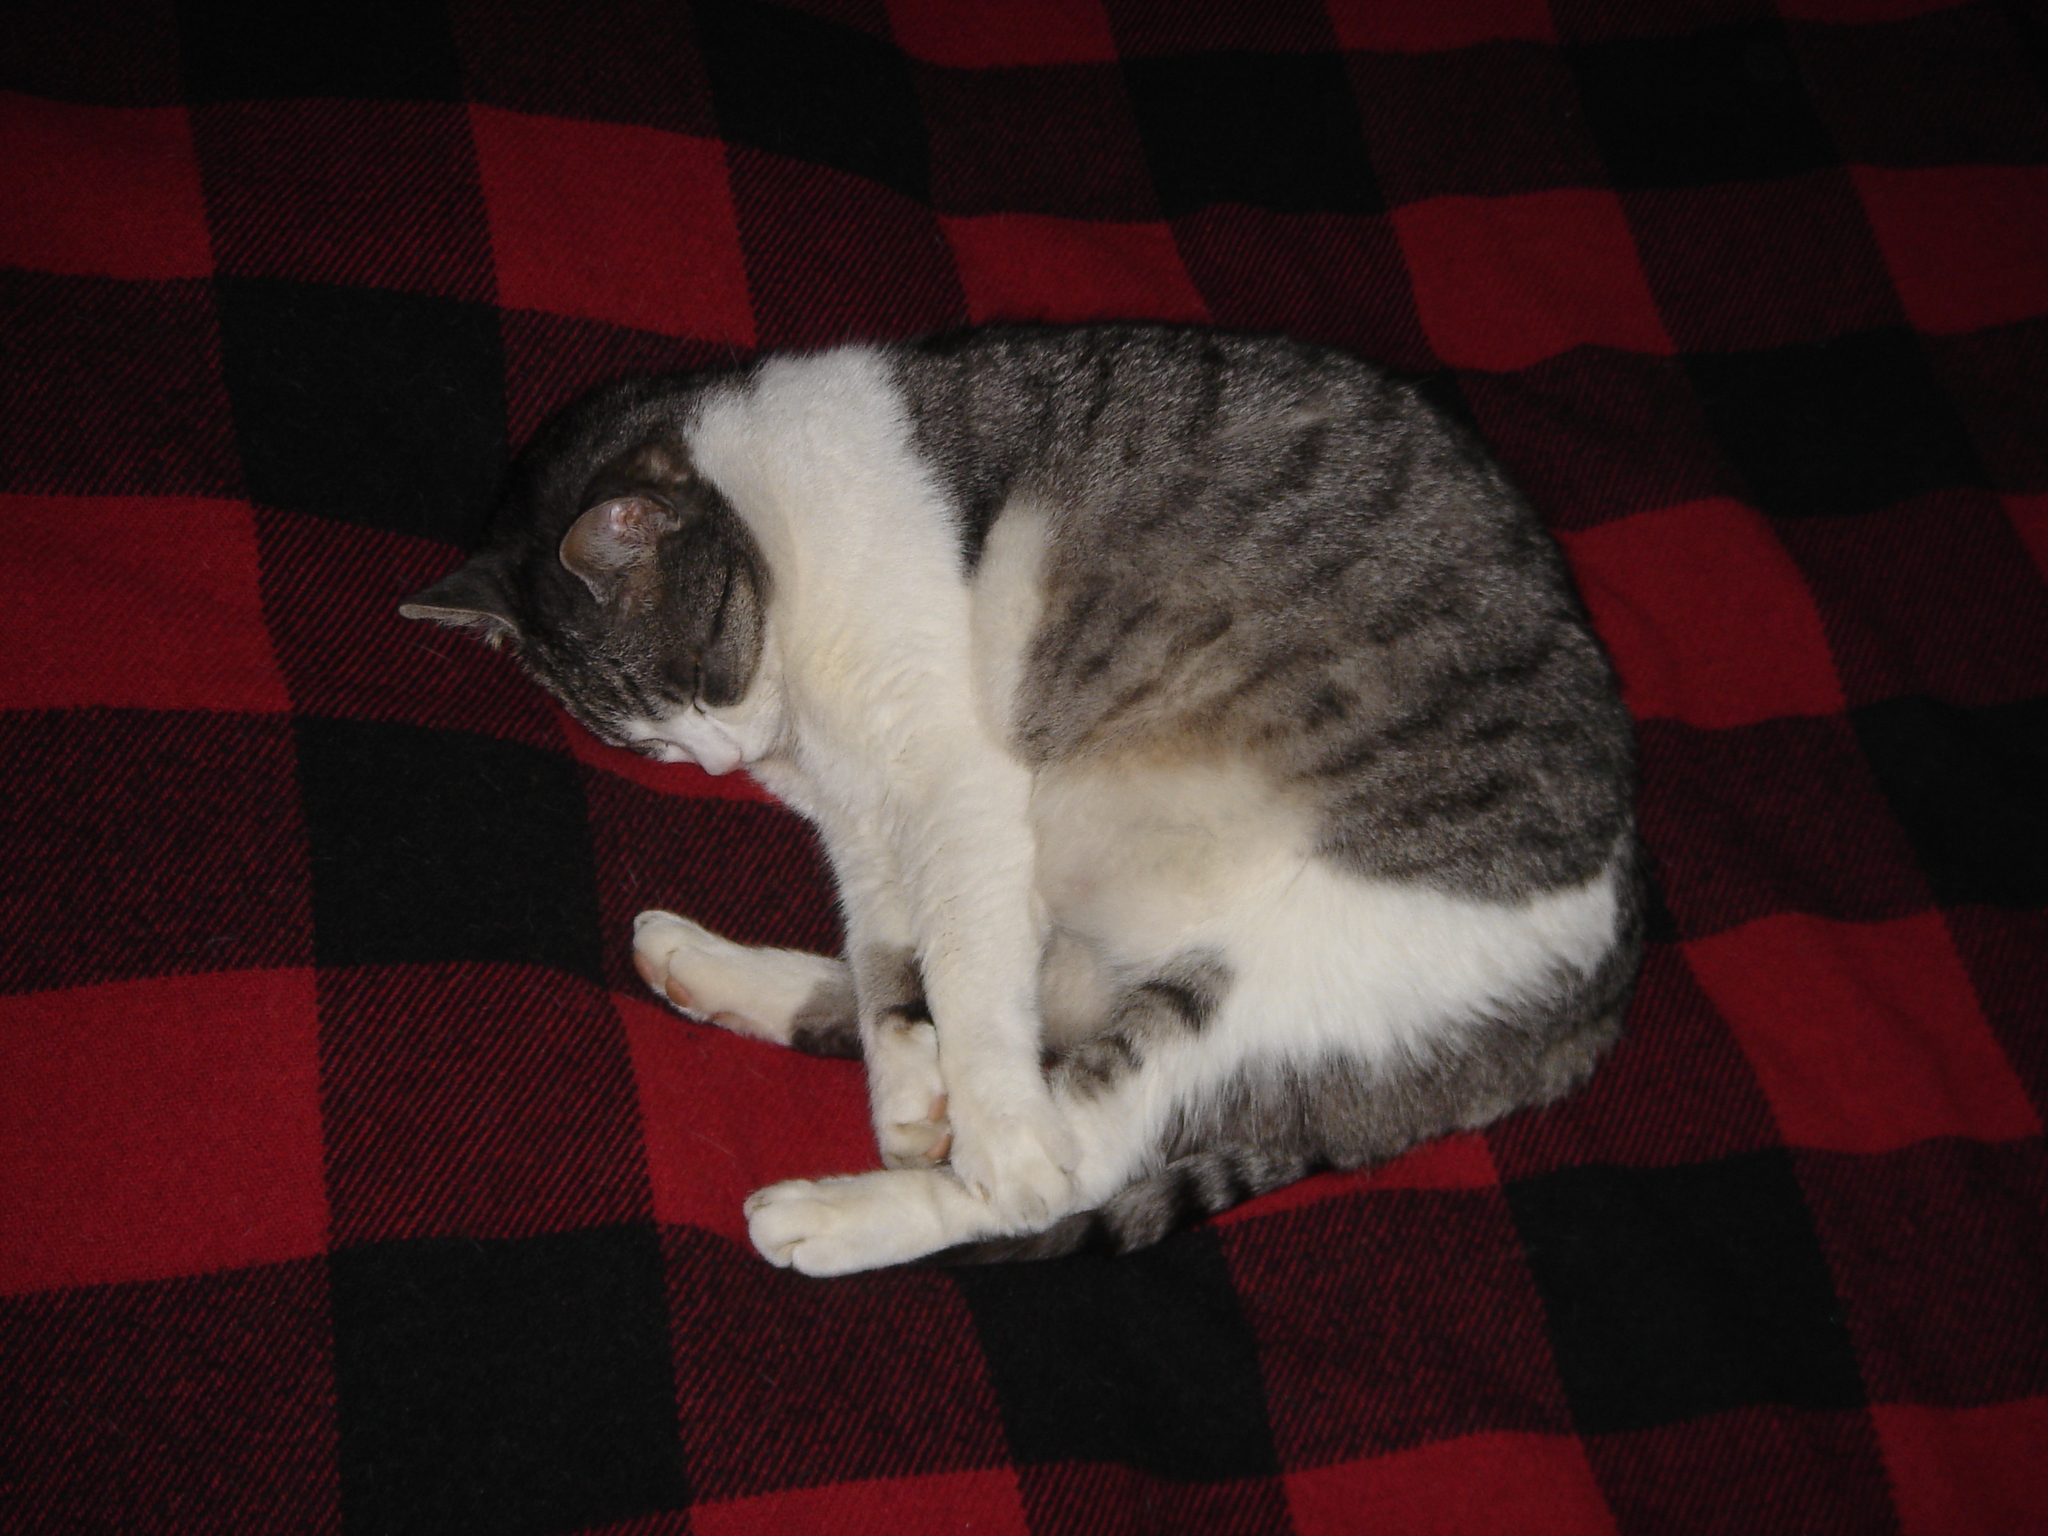 sissi-asleep-on-chequered-blanket-2006.jpg